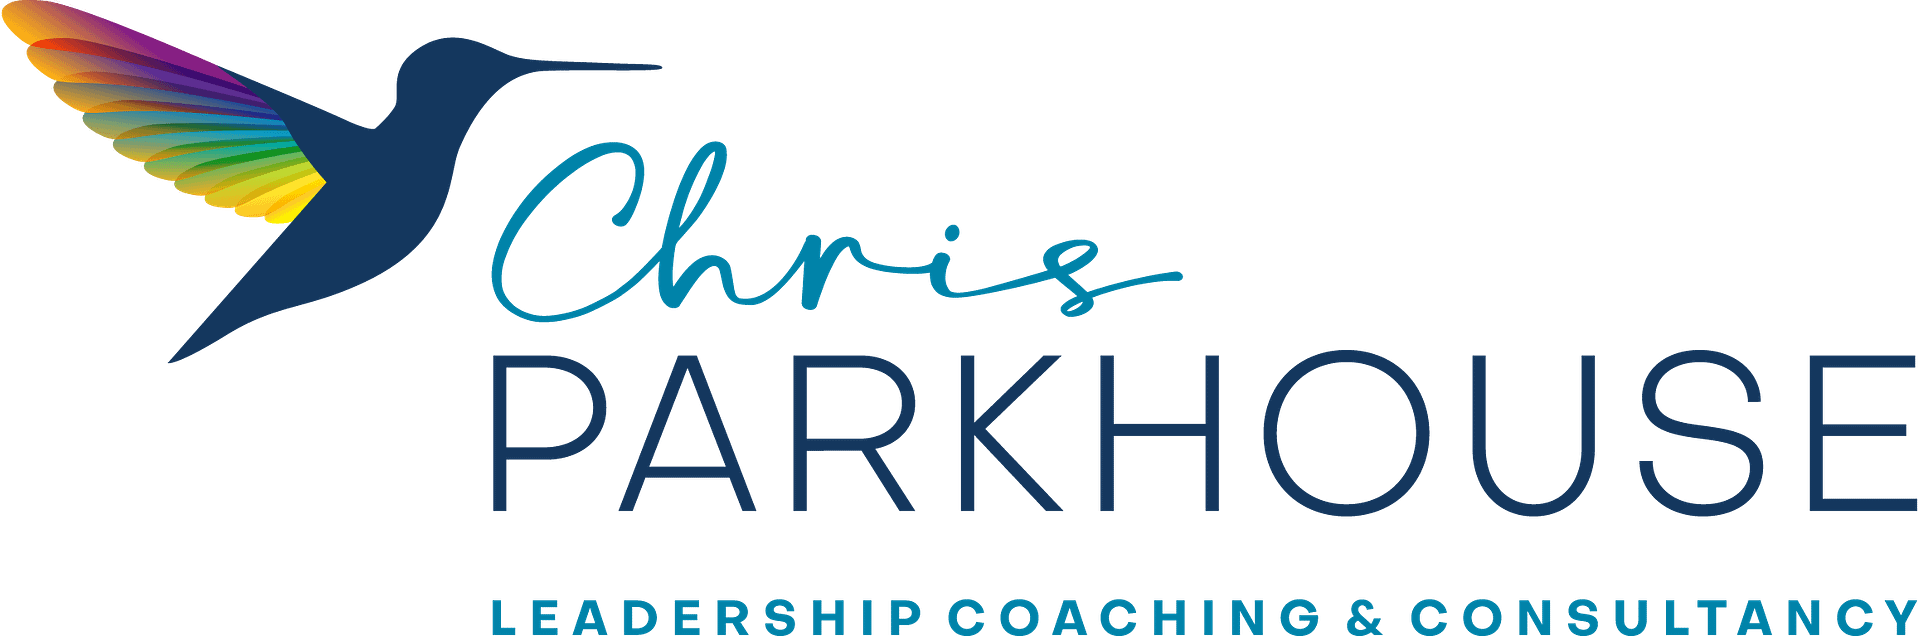 Chris Parkhouse | Leadership Coaching & Consultantancy